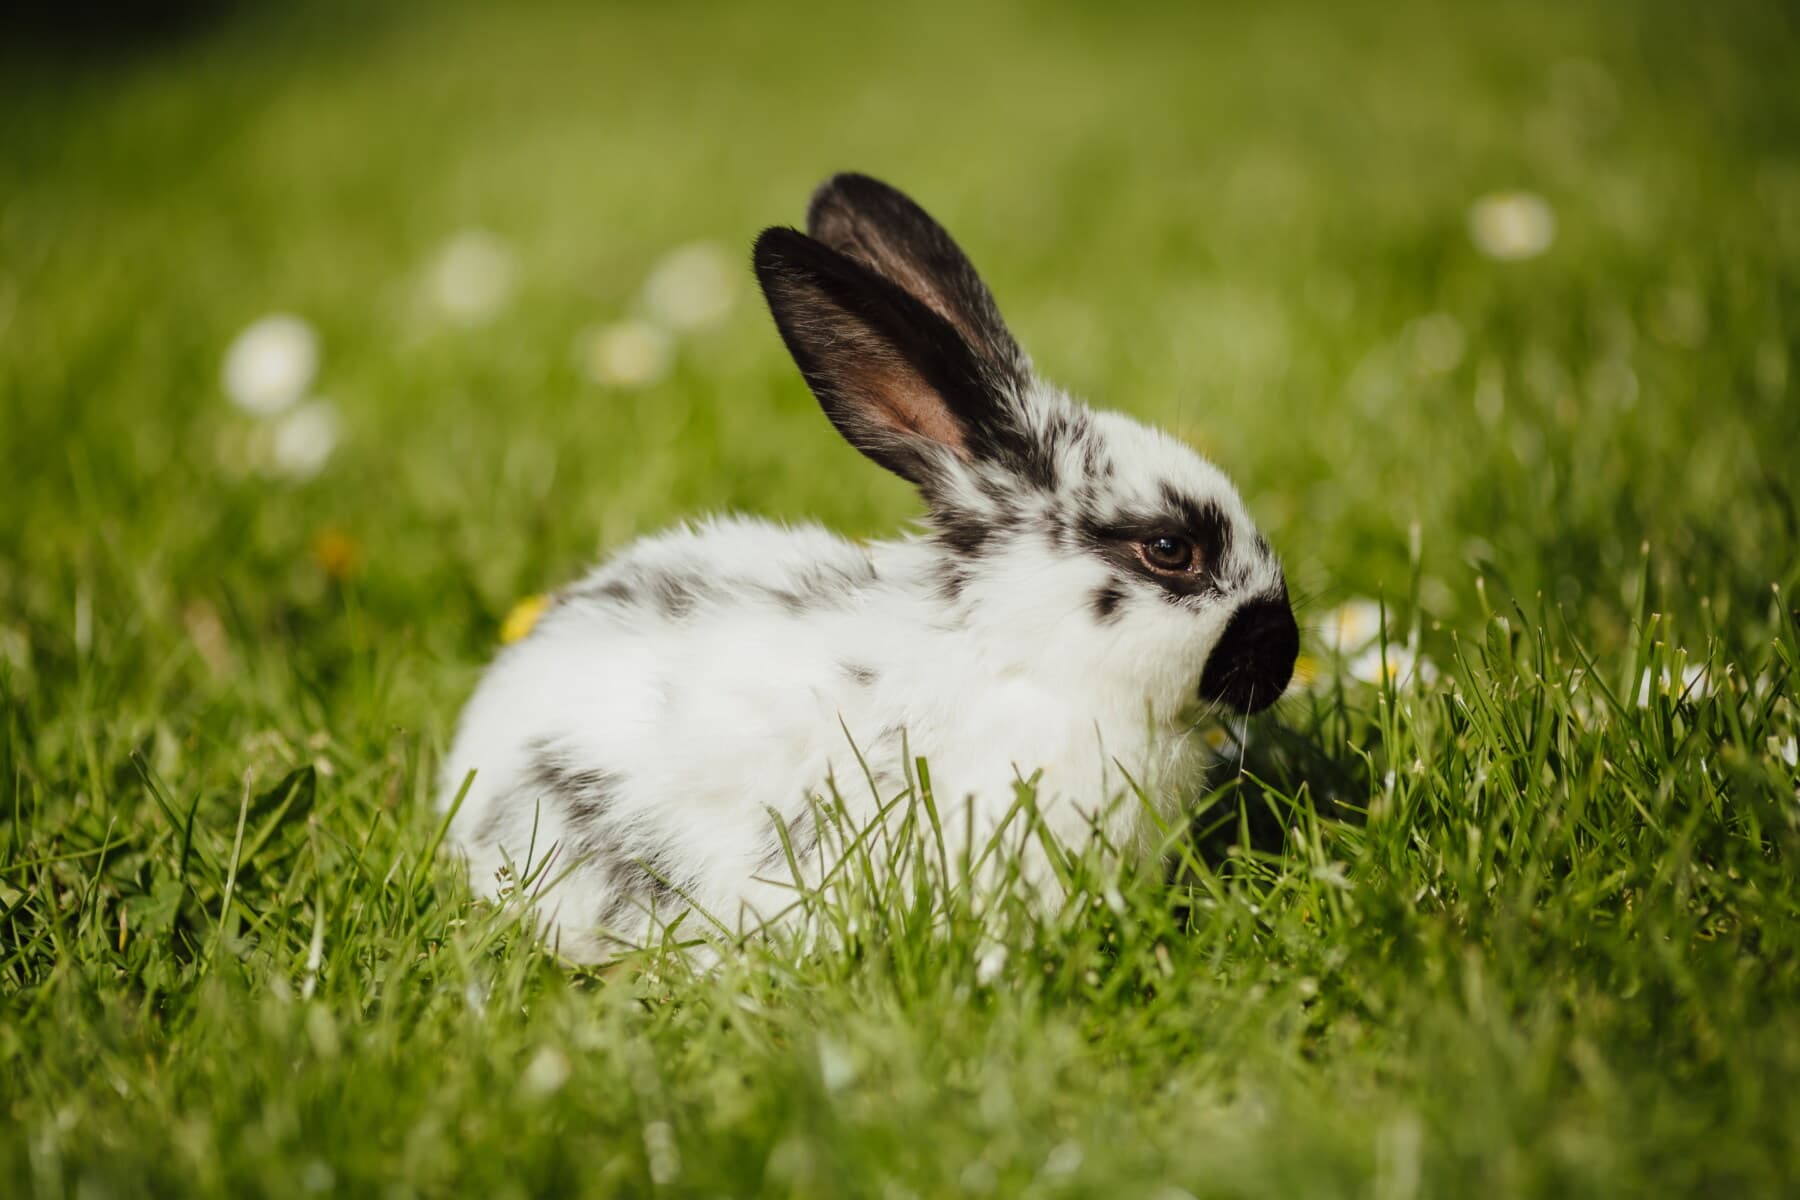 easter, bunny, rabbit, domestic, pet, grass, cute, fur, nature, hay field